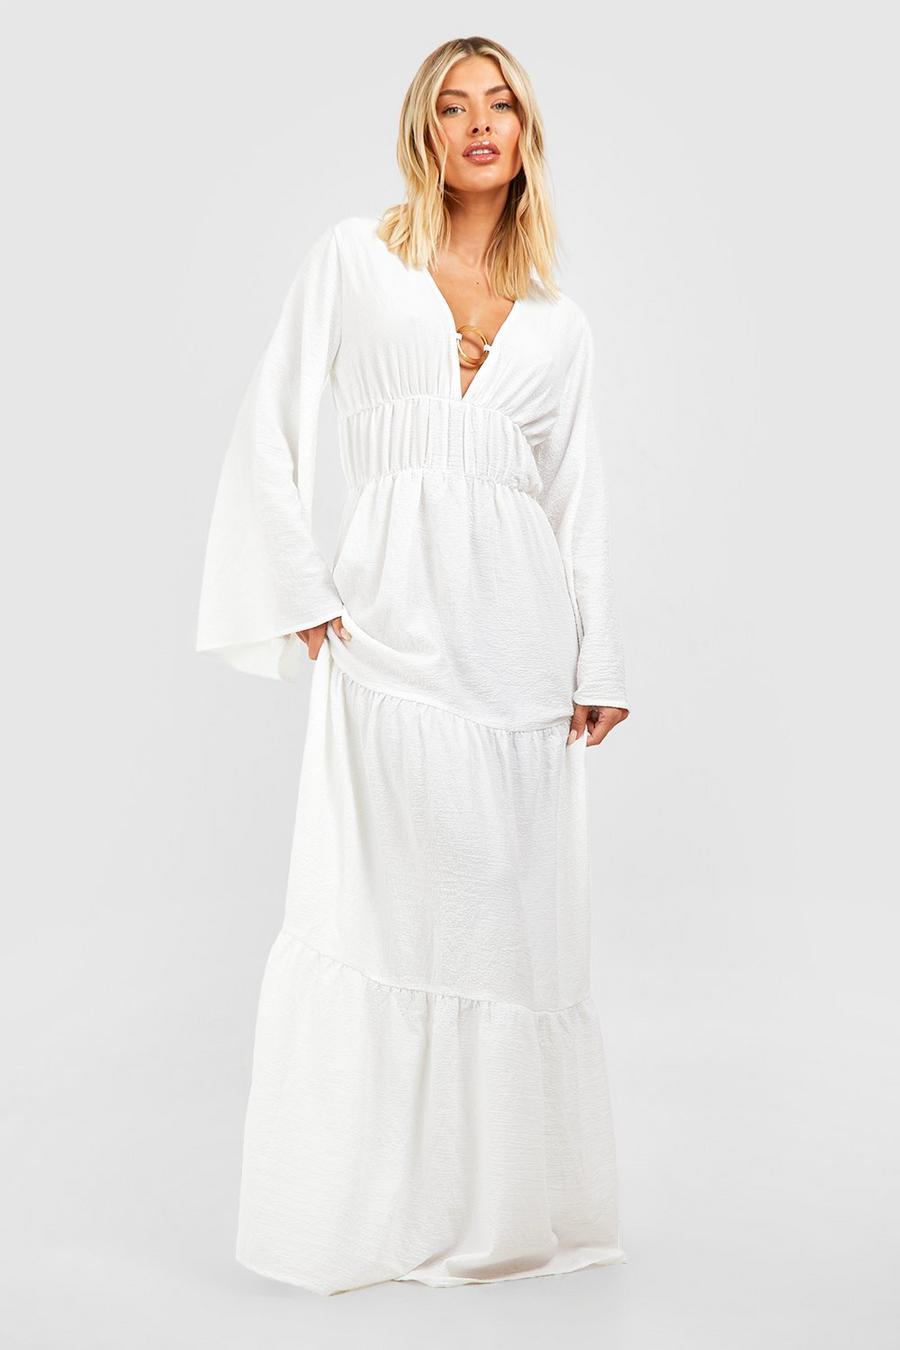 TEKSTUROWANa biała sukienka maxi dekolt styl boho 